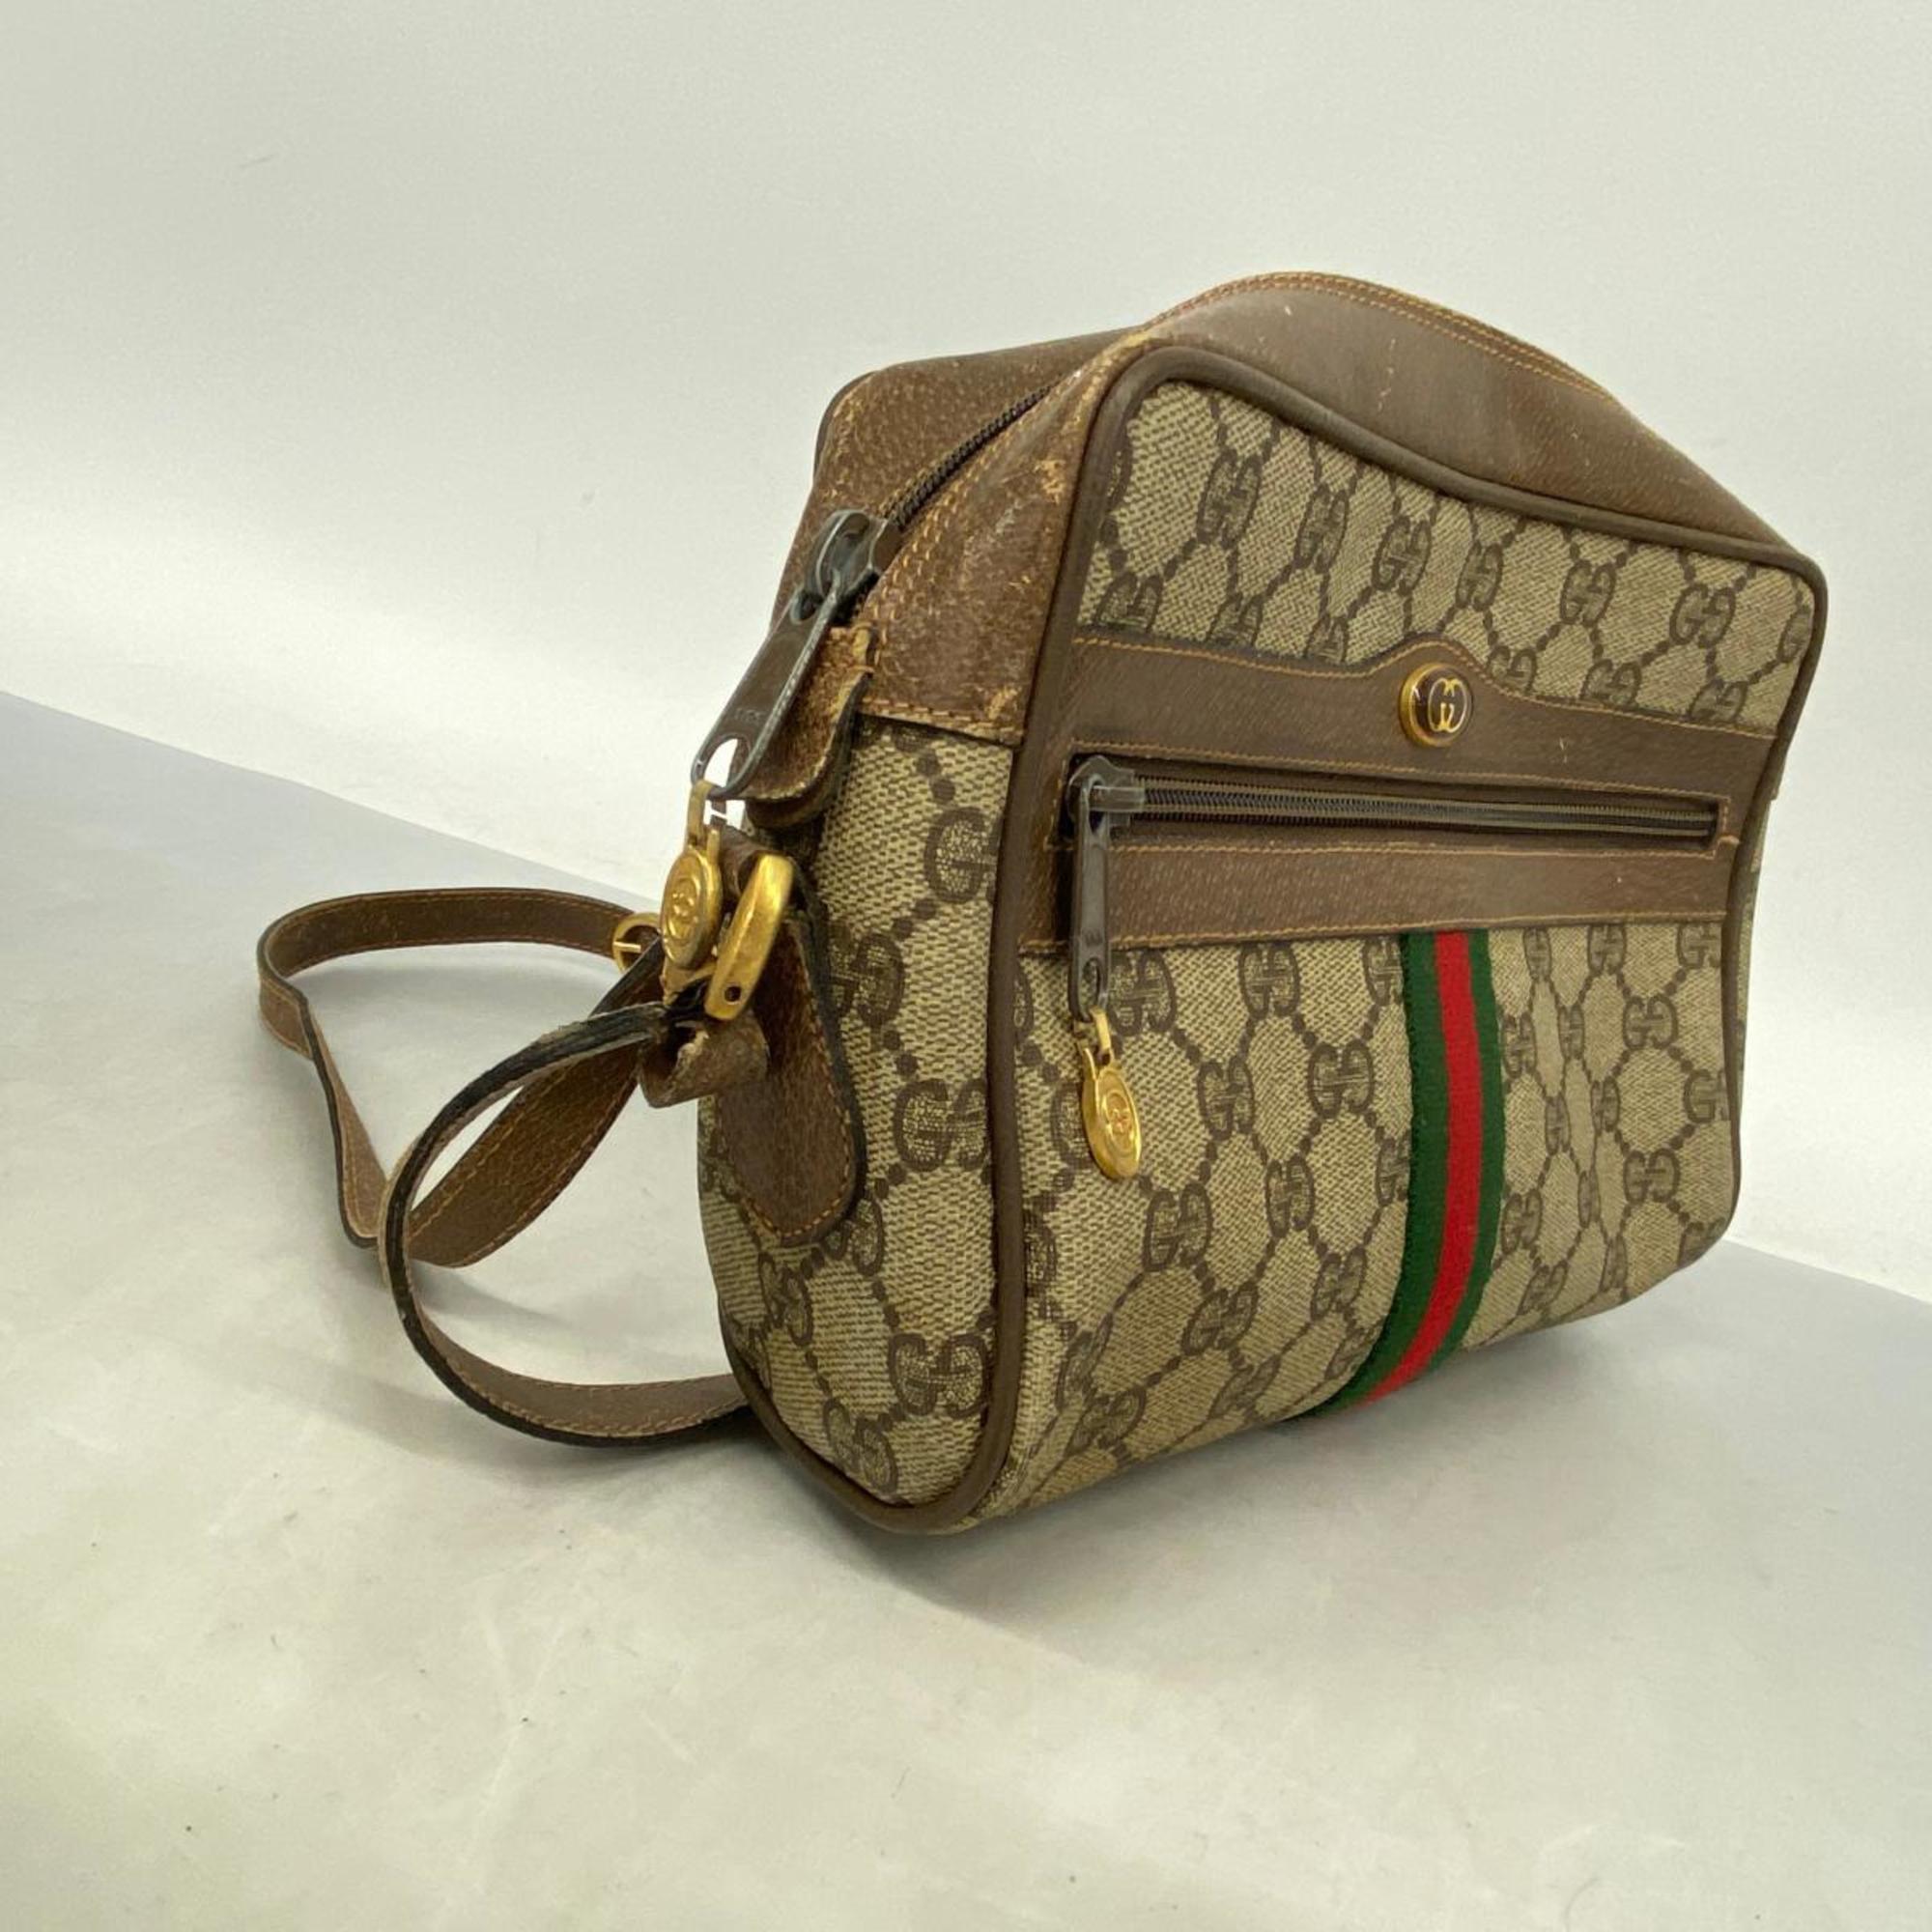 Gucci Shoulder Bag GG Supreme Sherry Line 98 02 004 Brown Beige Women's